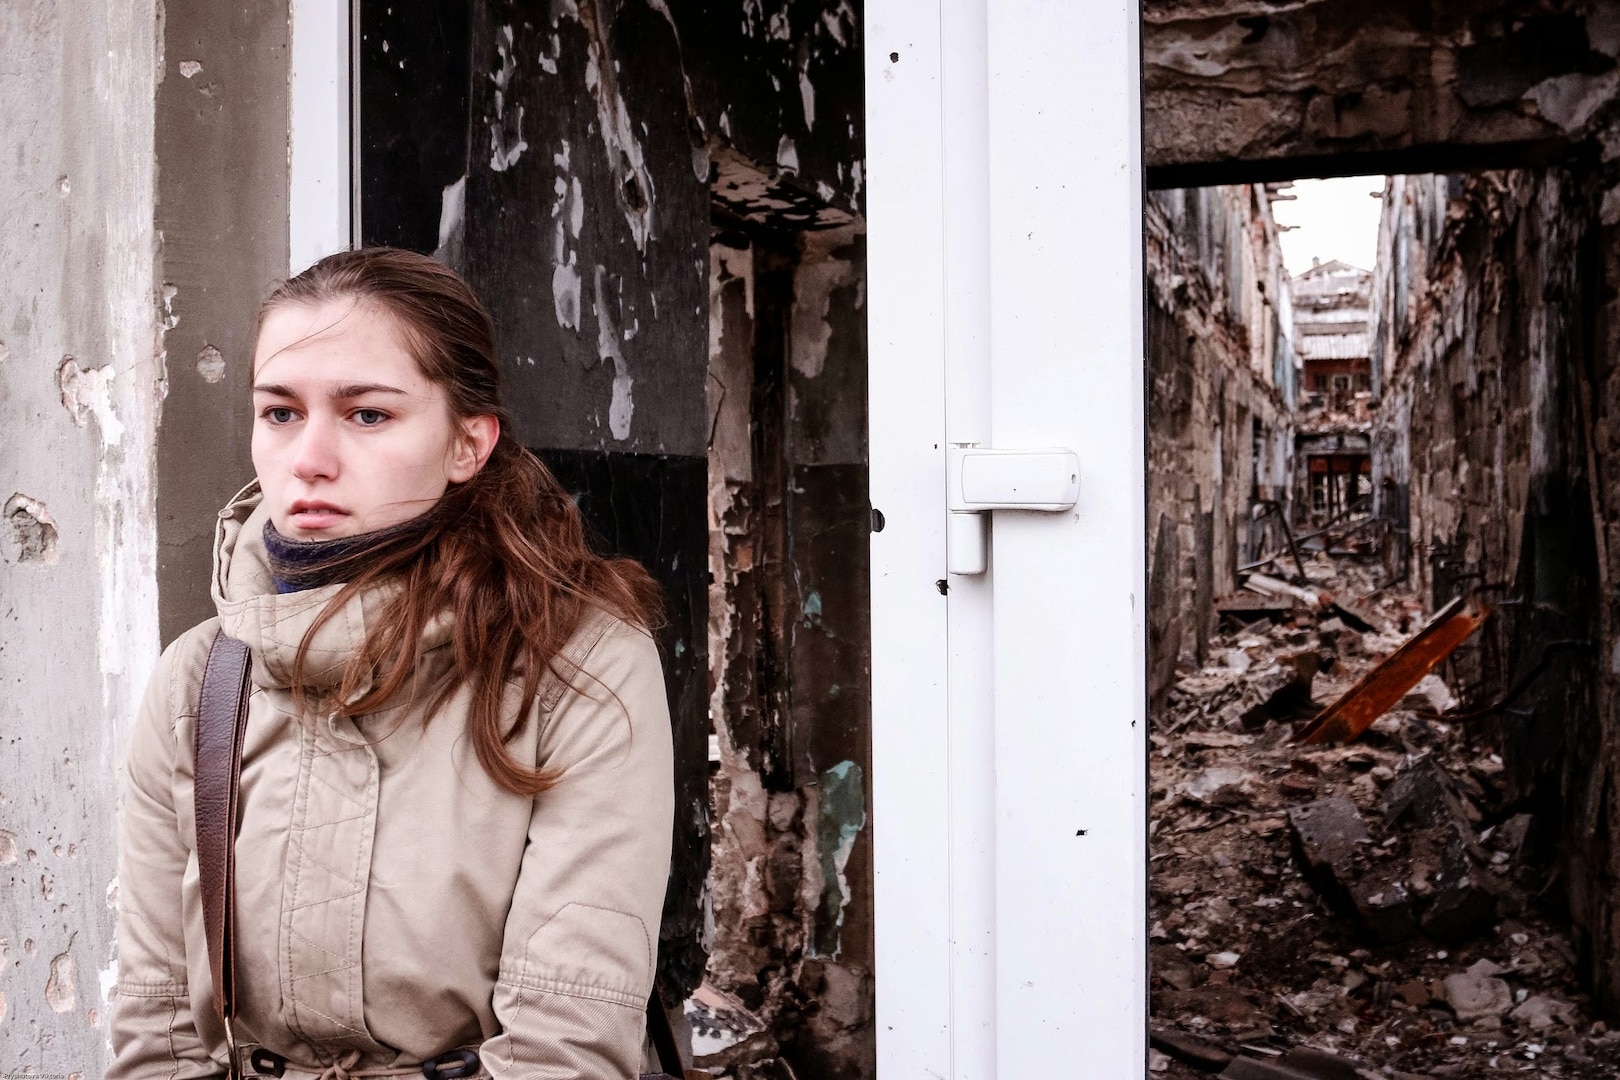 Damaged building in Kurakhove, Ukraine, 10 miles west of the frontlines in Donbass, November 26, 2014